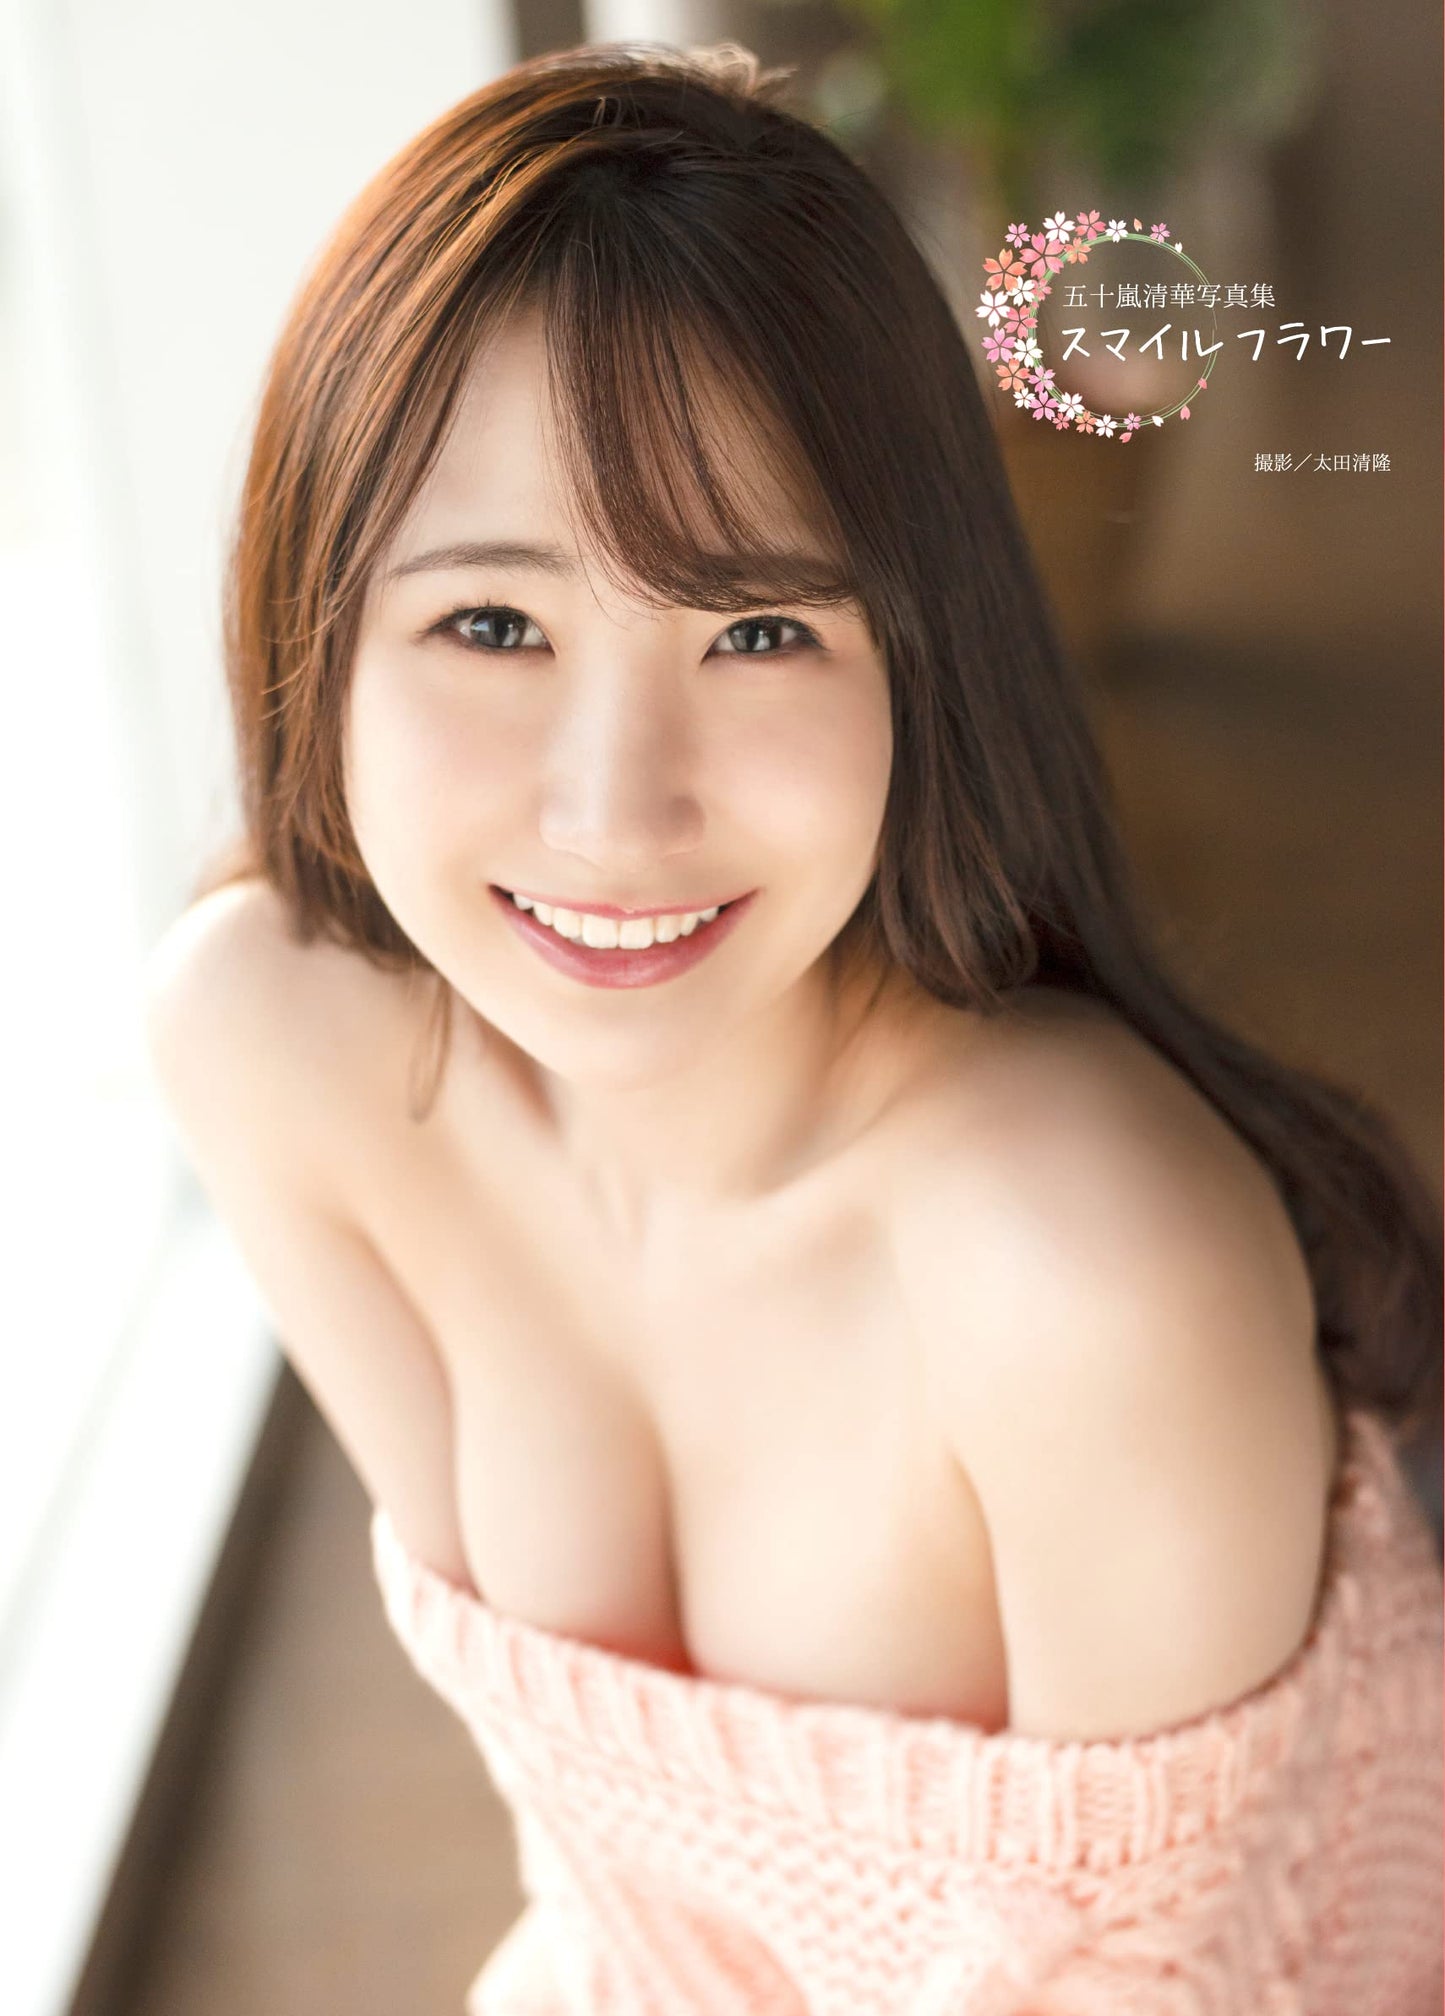 Kiyoka Igarashi Photo Book "smile flower "